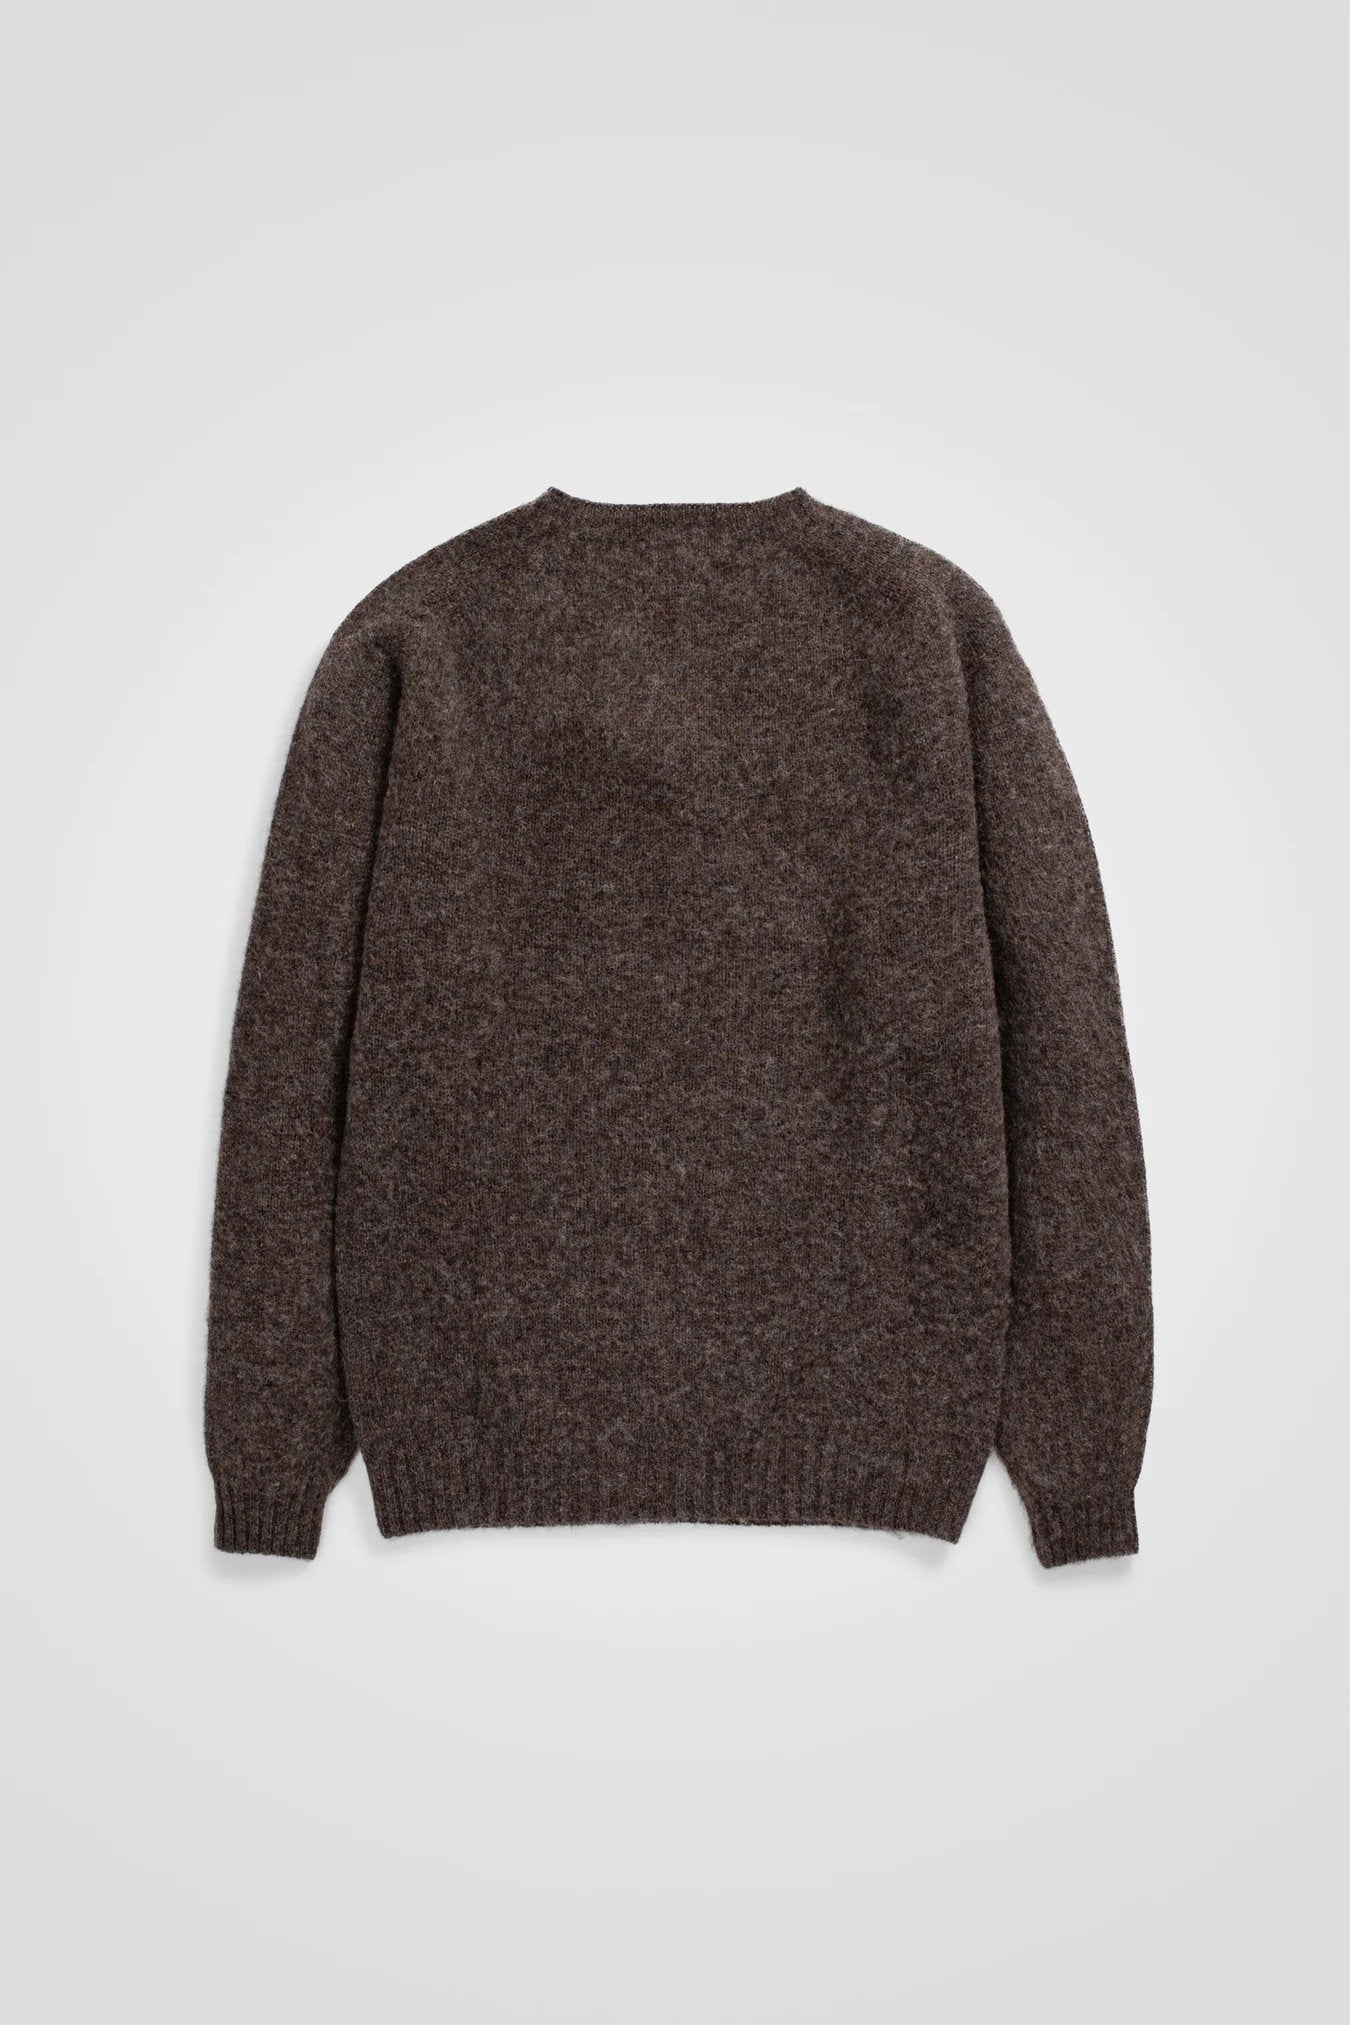 Birnir Brushed Lambswool Sweater - Norse Projects - Danali - N45-0520-WarmGrey-M